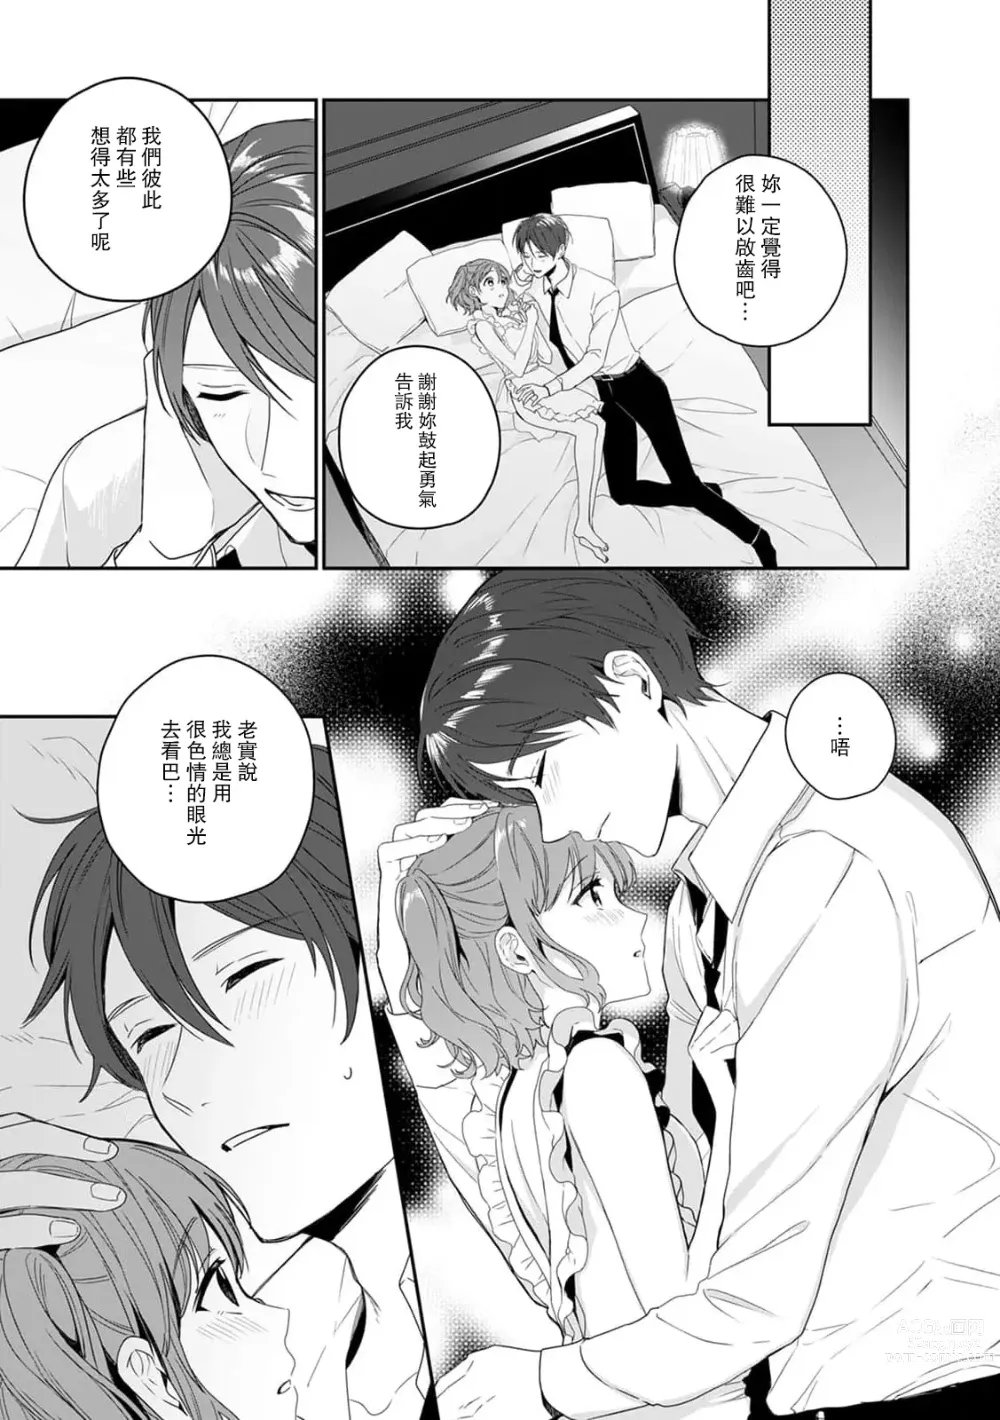 Page 6 of manga 原偶像妻子融化于丈夫浓厚的宠爱…！